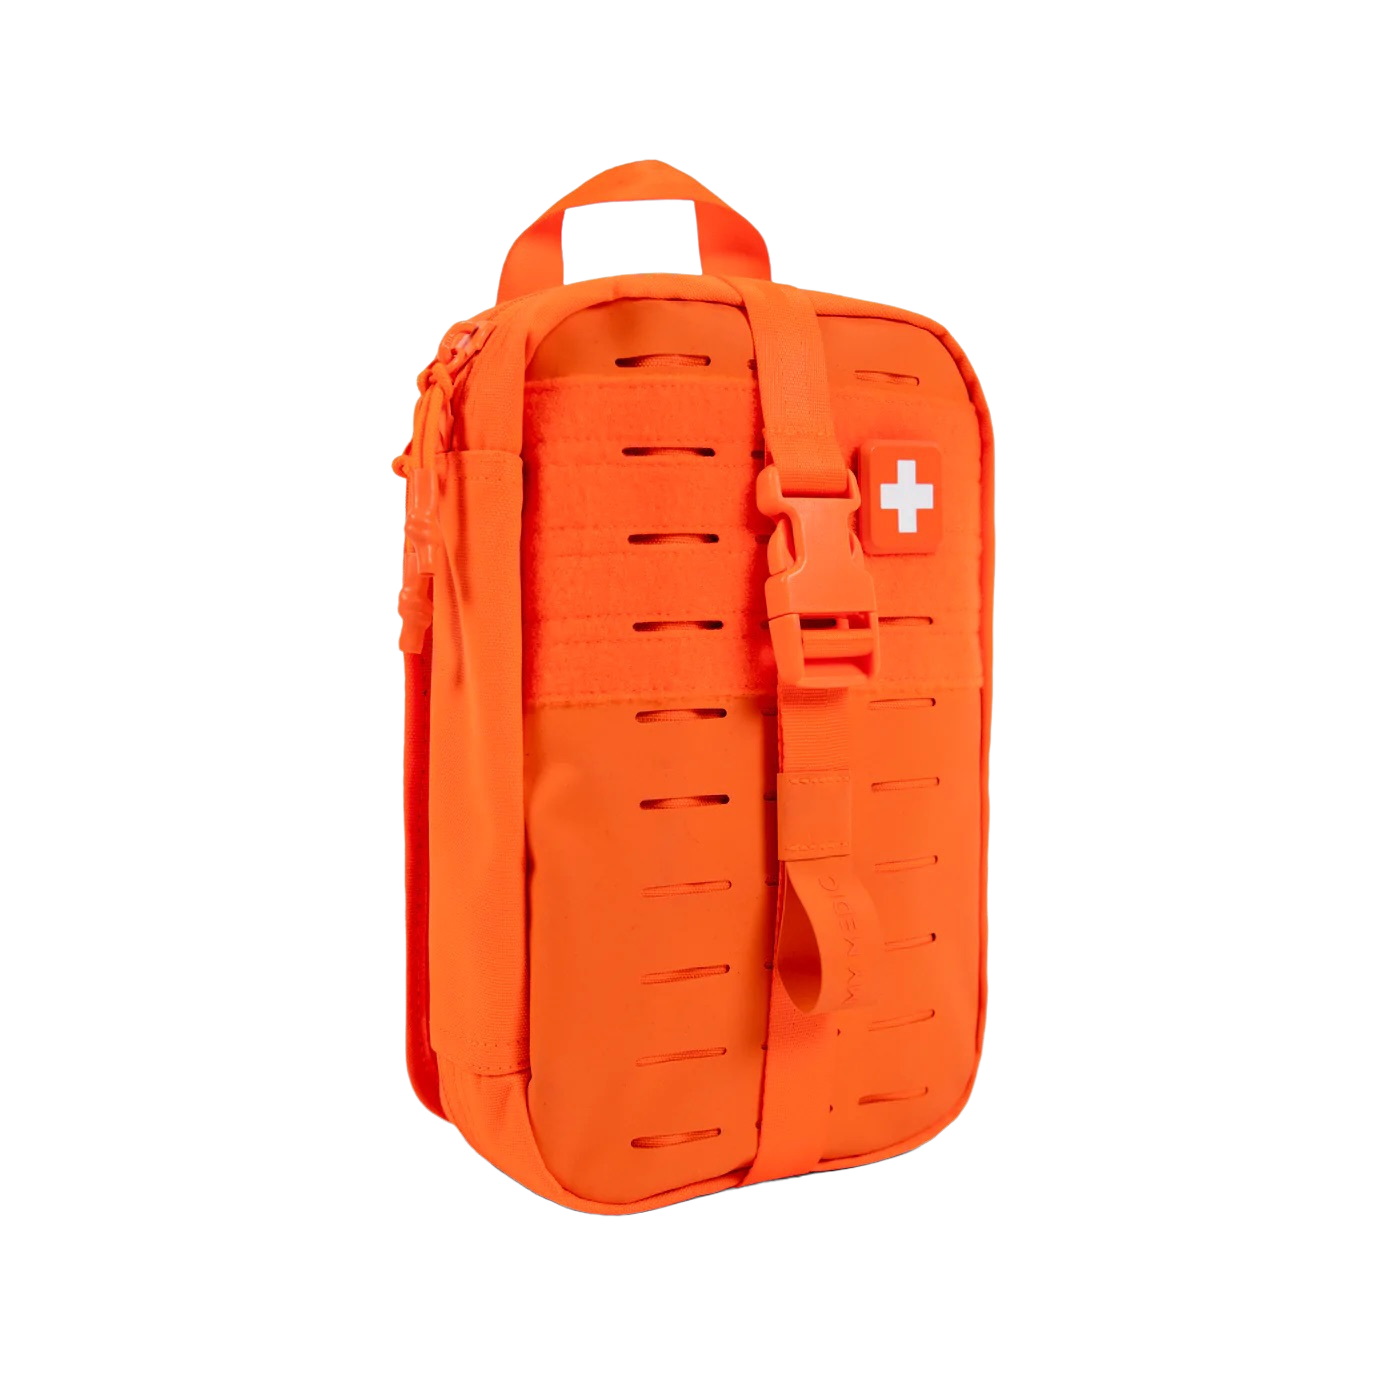 MyFAK | First Aid Kit